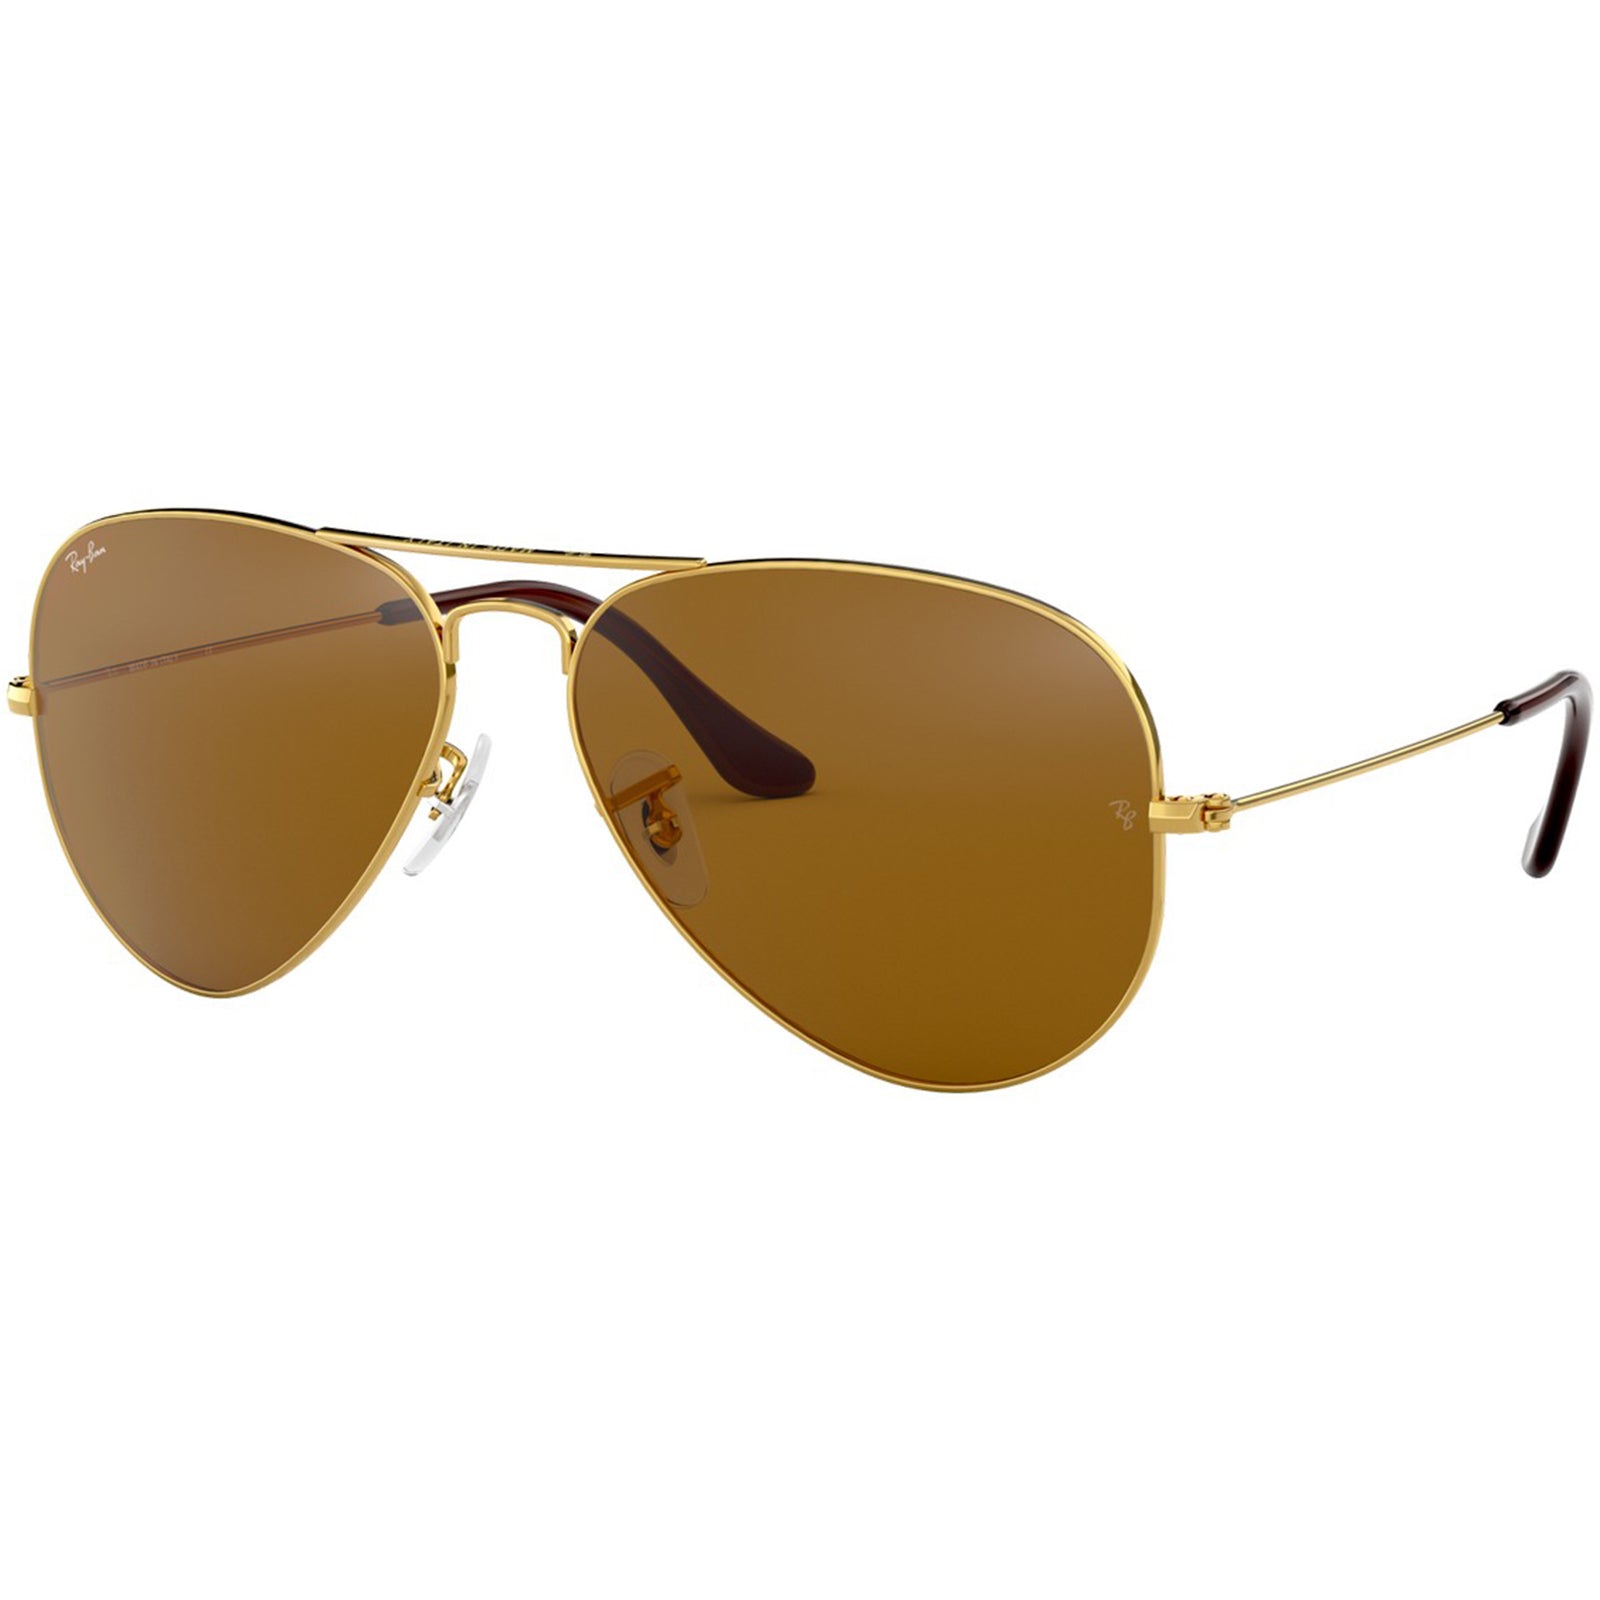 Ray-Ban Classic Adult Aviator Sunglasses-0RB3025